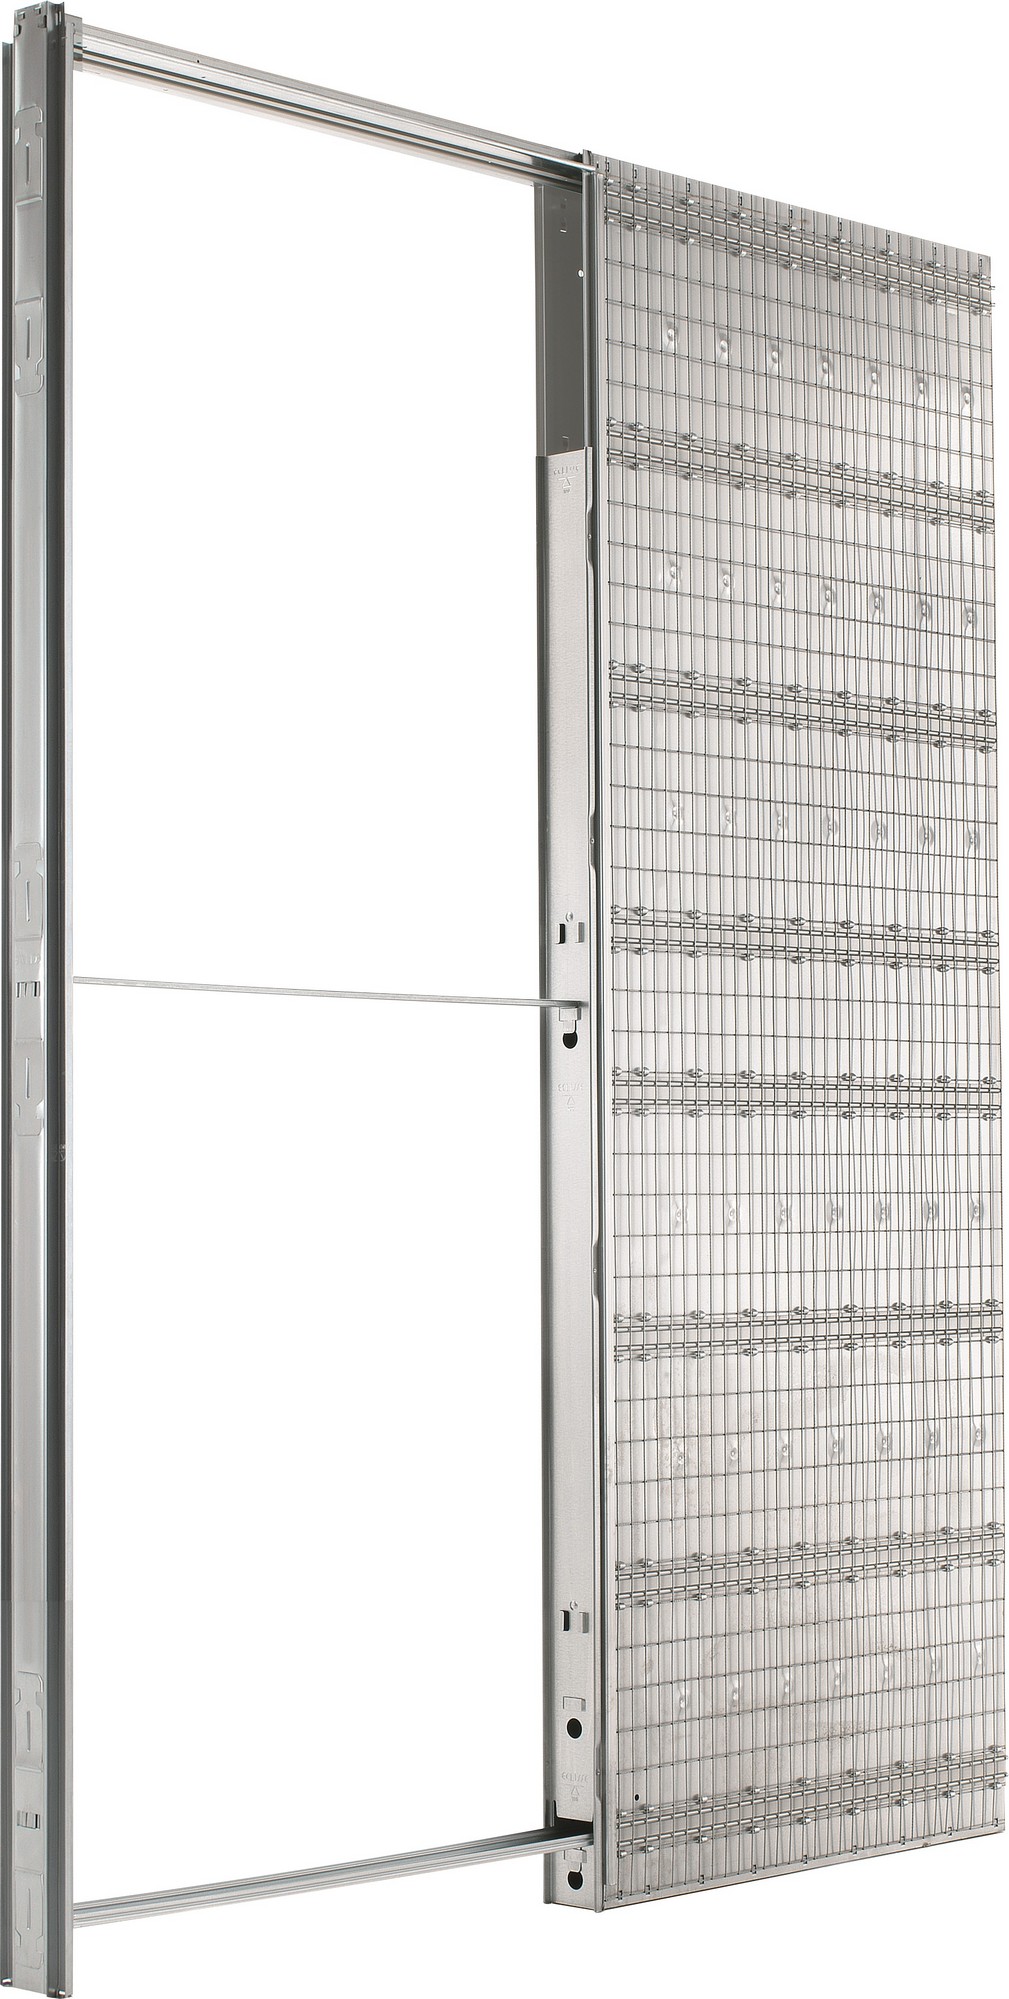 Pouzdro Eclisse Standard 1100/2100 mm do zdiva tl. 150 mm